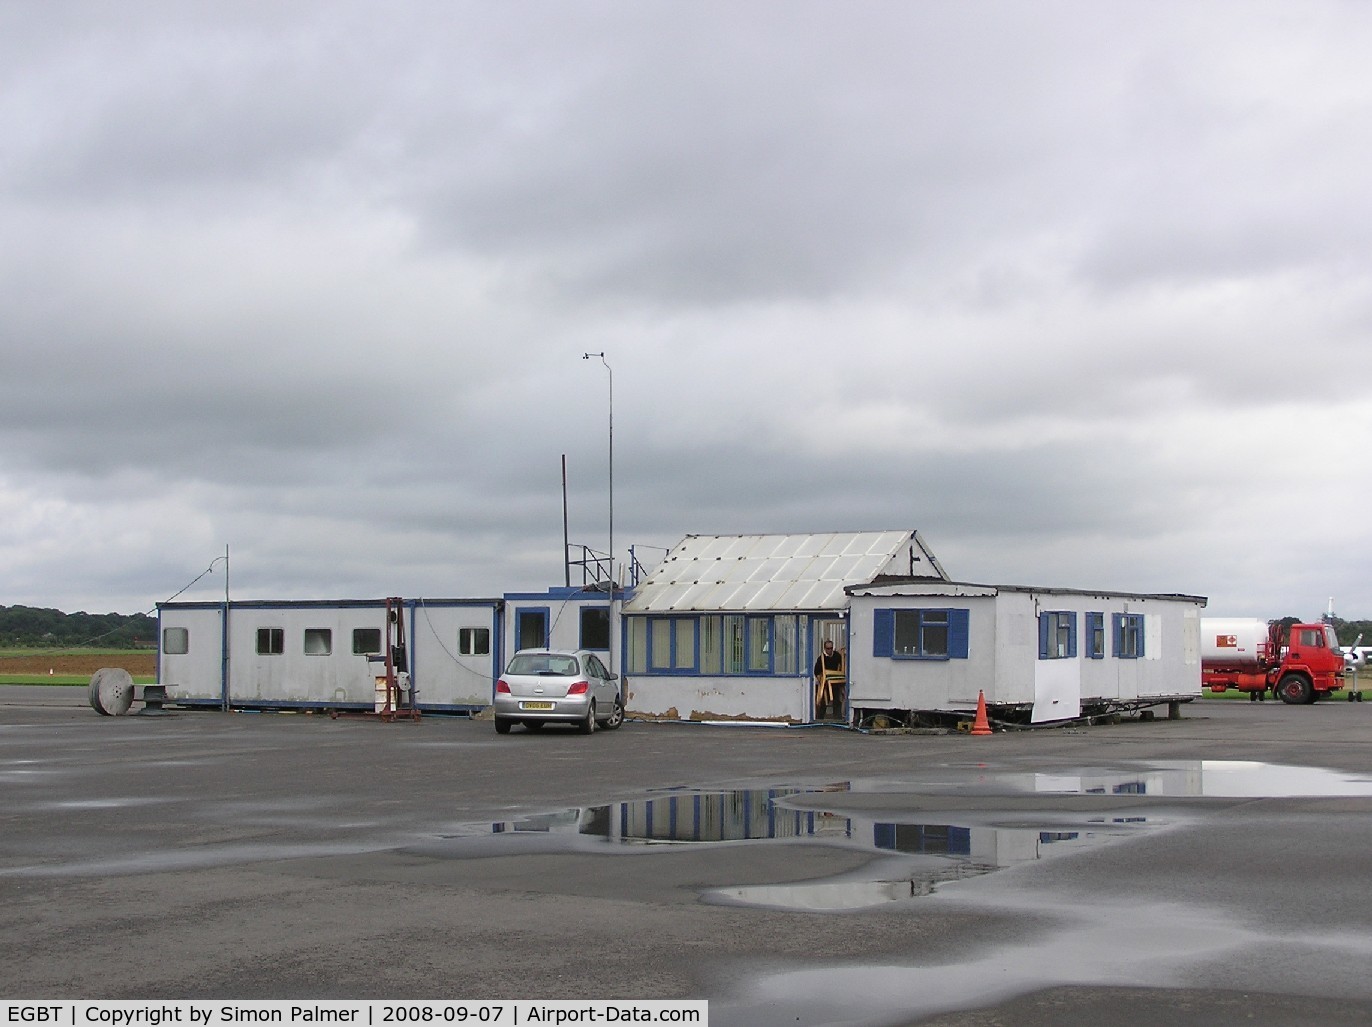 Turweston Aerodrome Airport, Turweston, England United Kingdom (EGBT) - The old hangar and clubhouse at Turweston